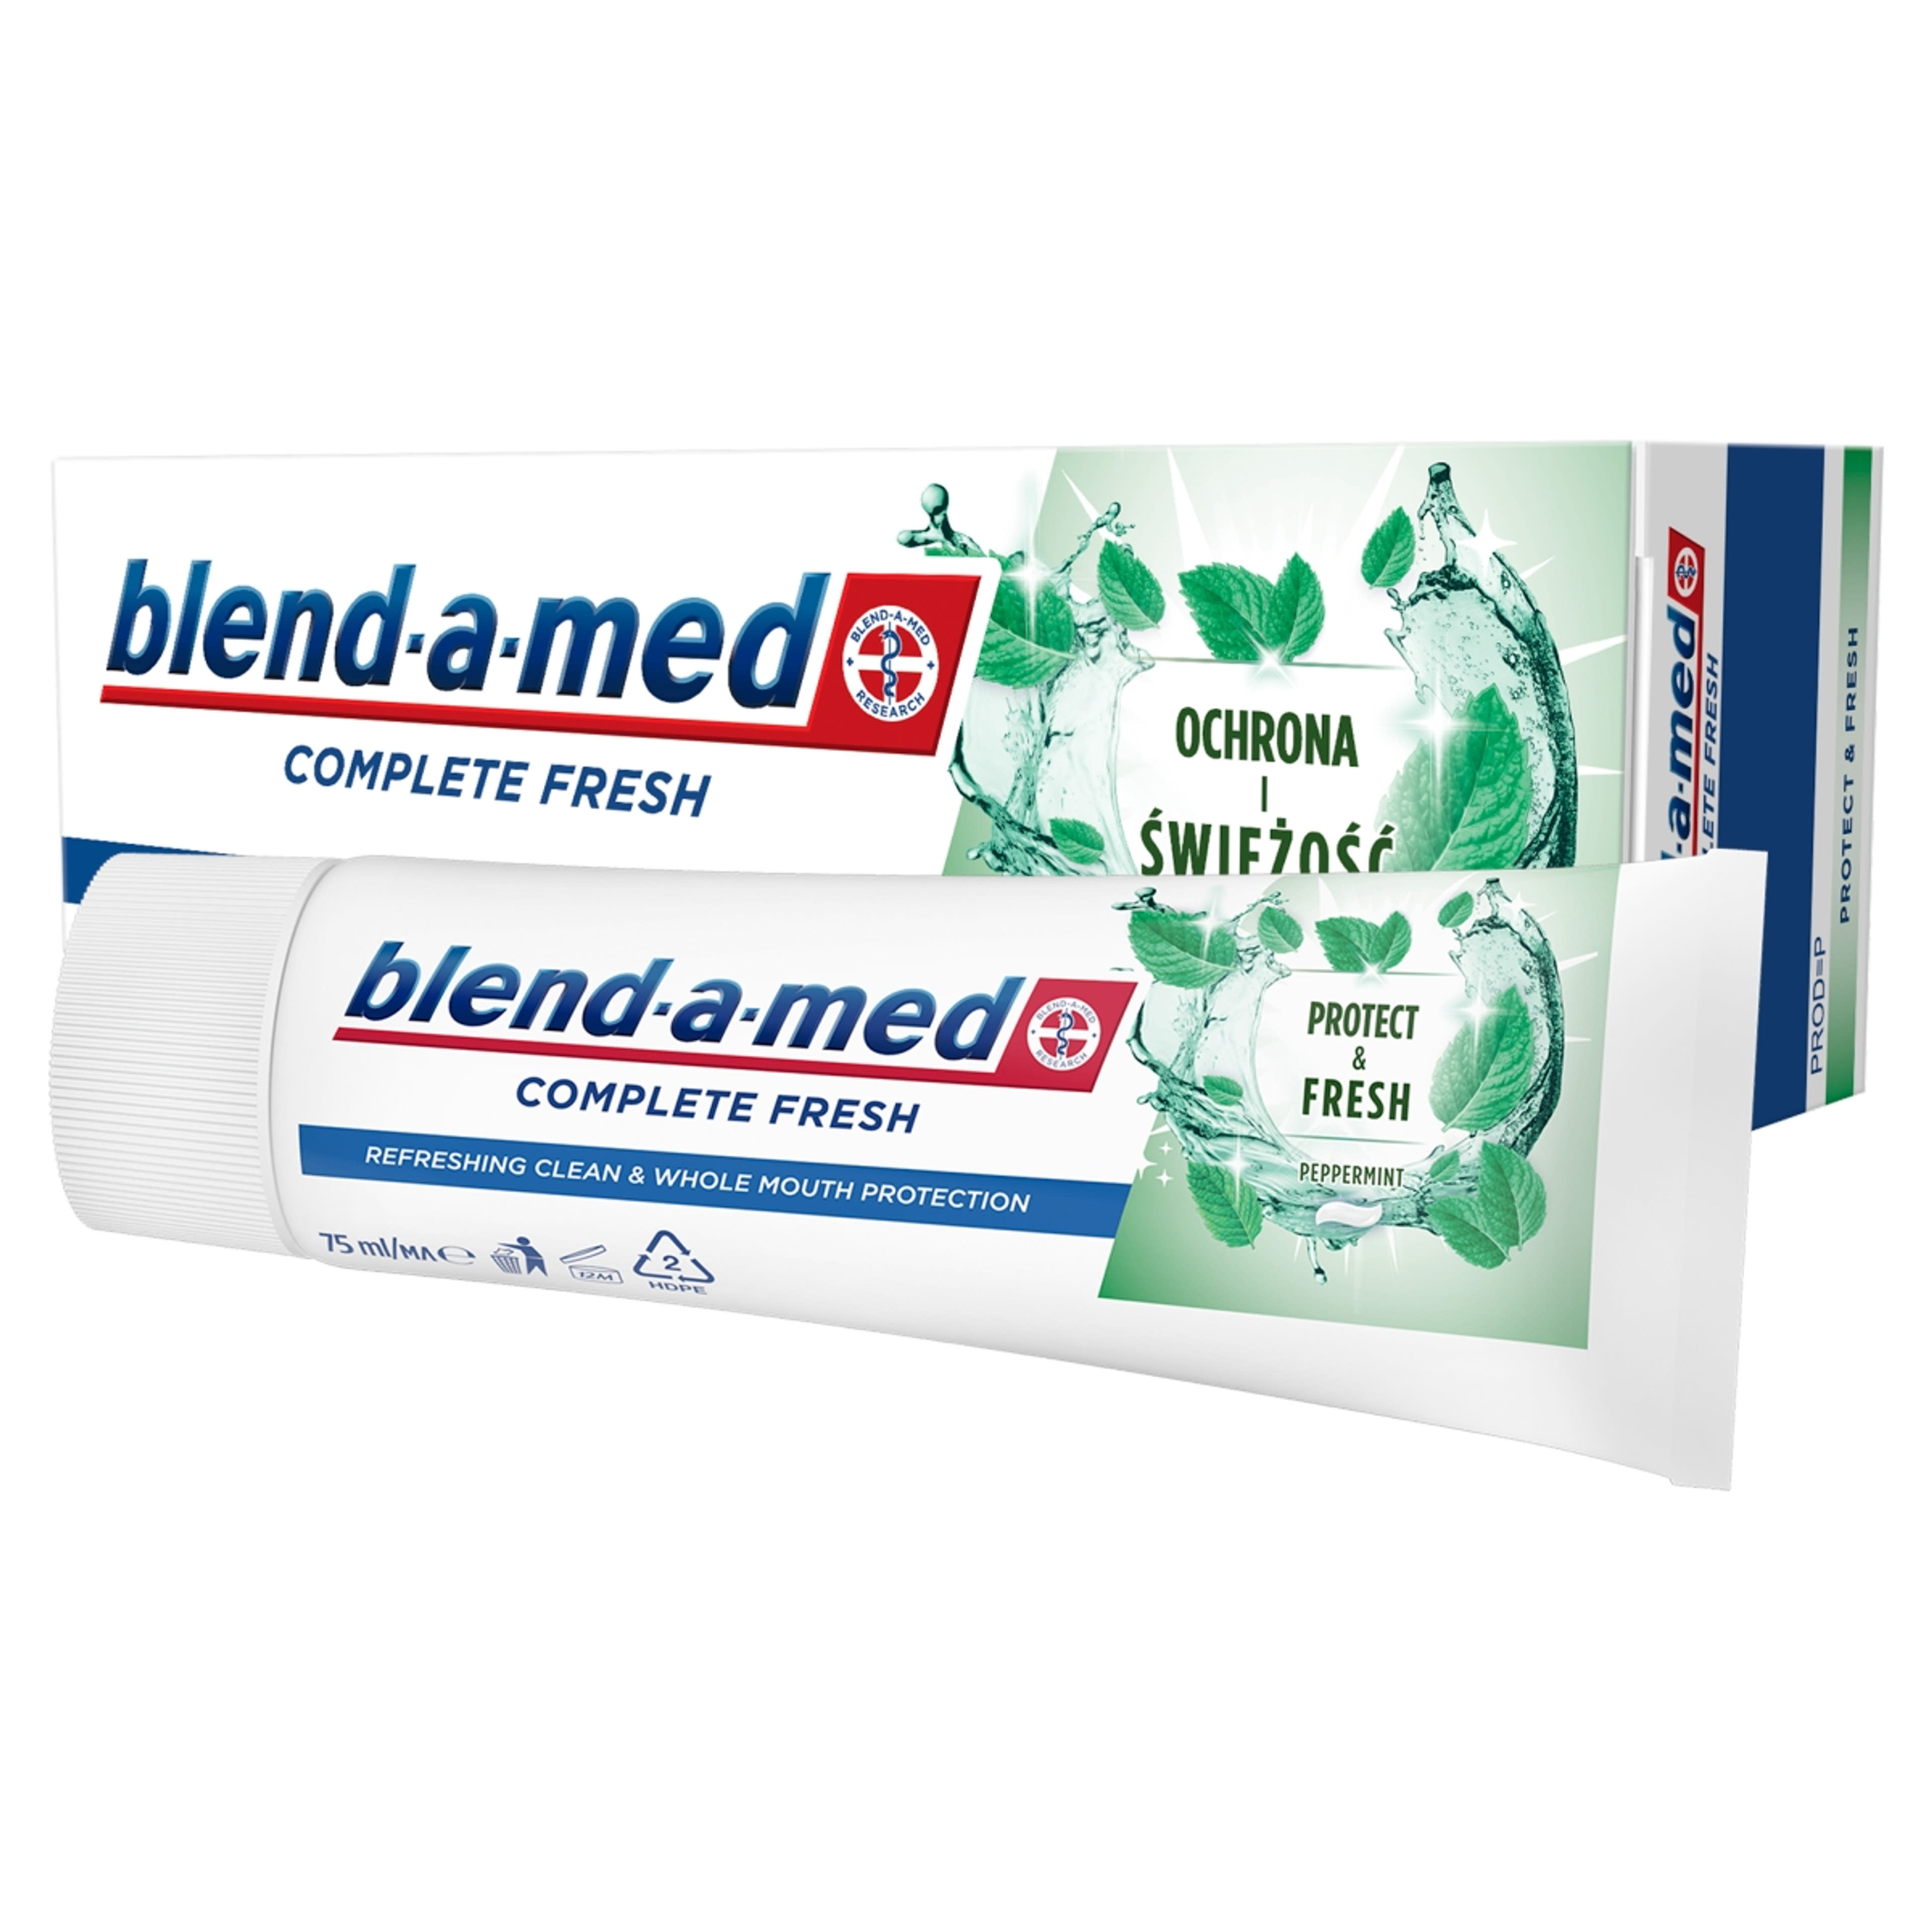 Blend-a-med Complete Fresh Protect & Fresh fogkrém - 75 ml-2